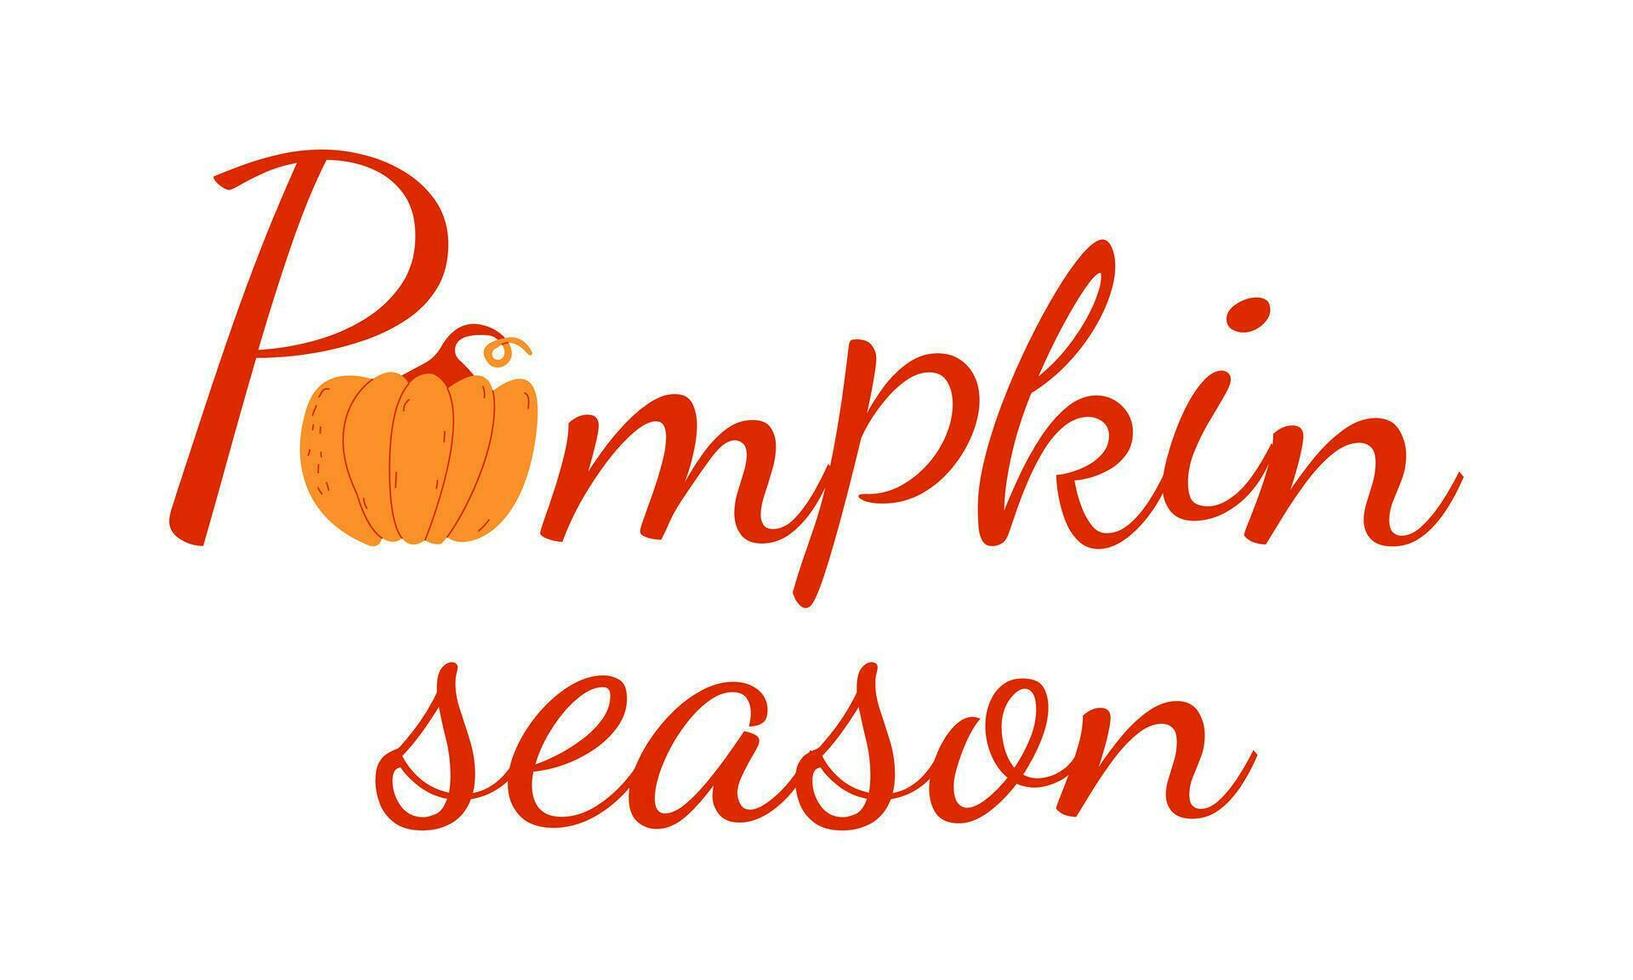 Pumpkin Season. Autumn design with text and pumpkins. vector